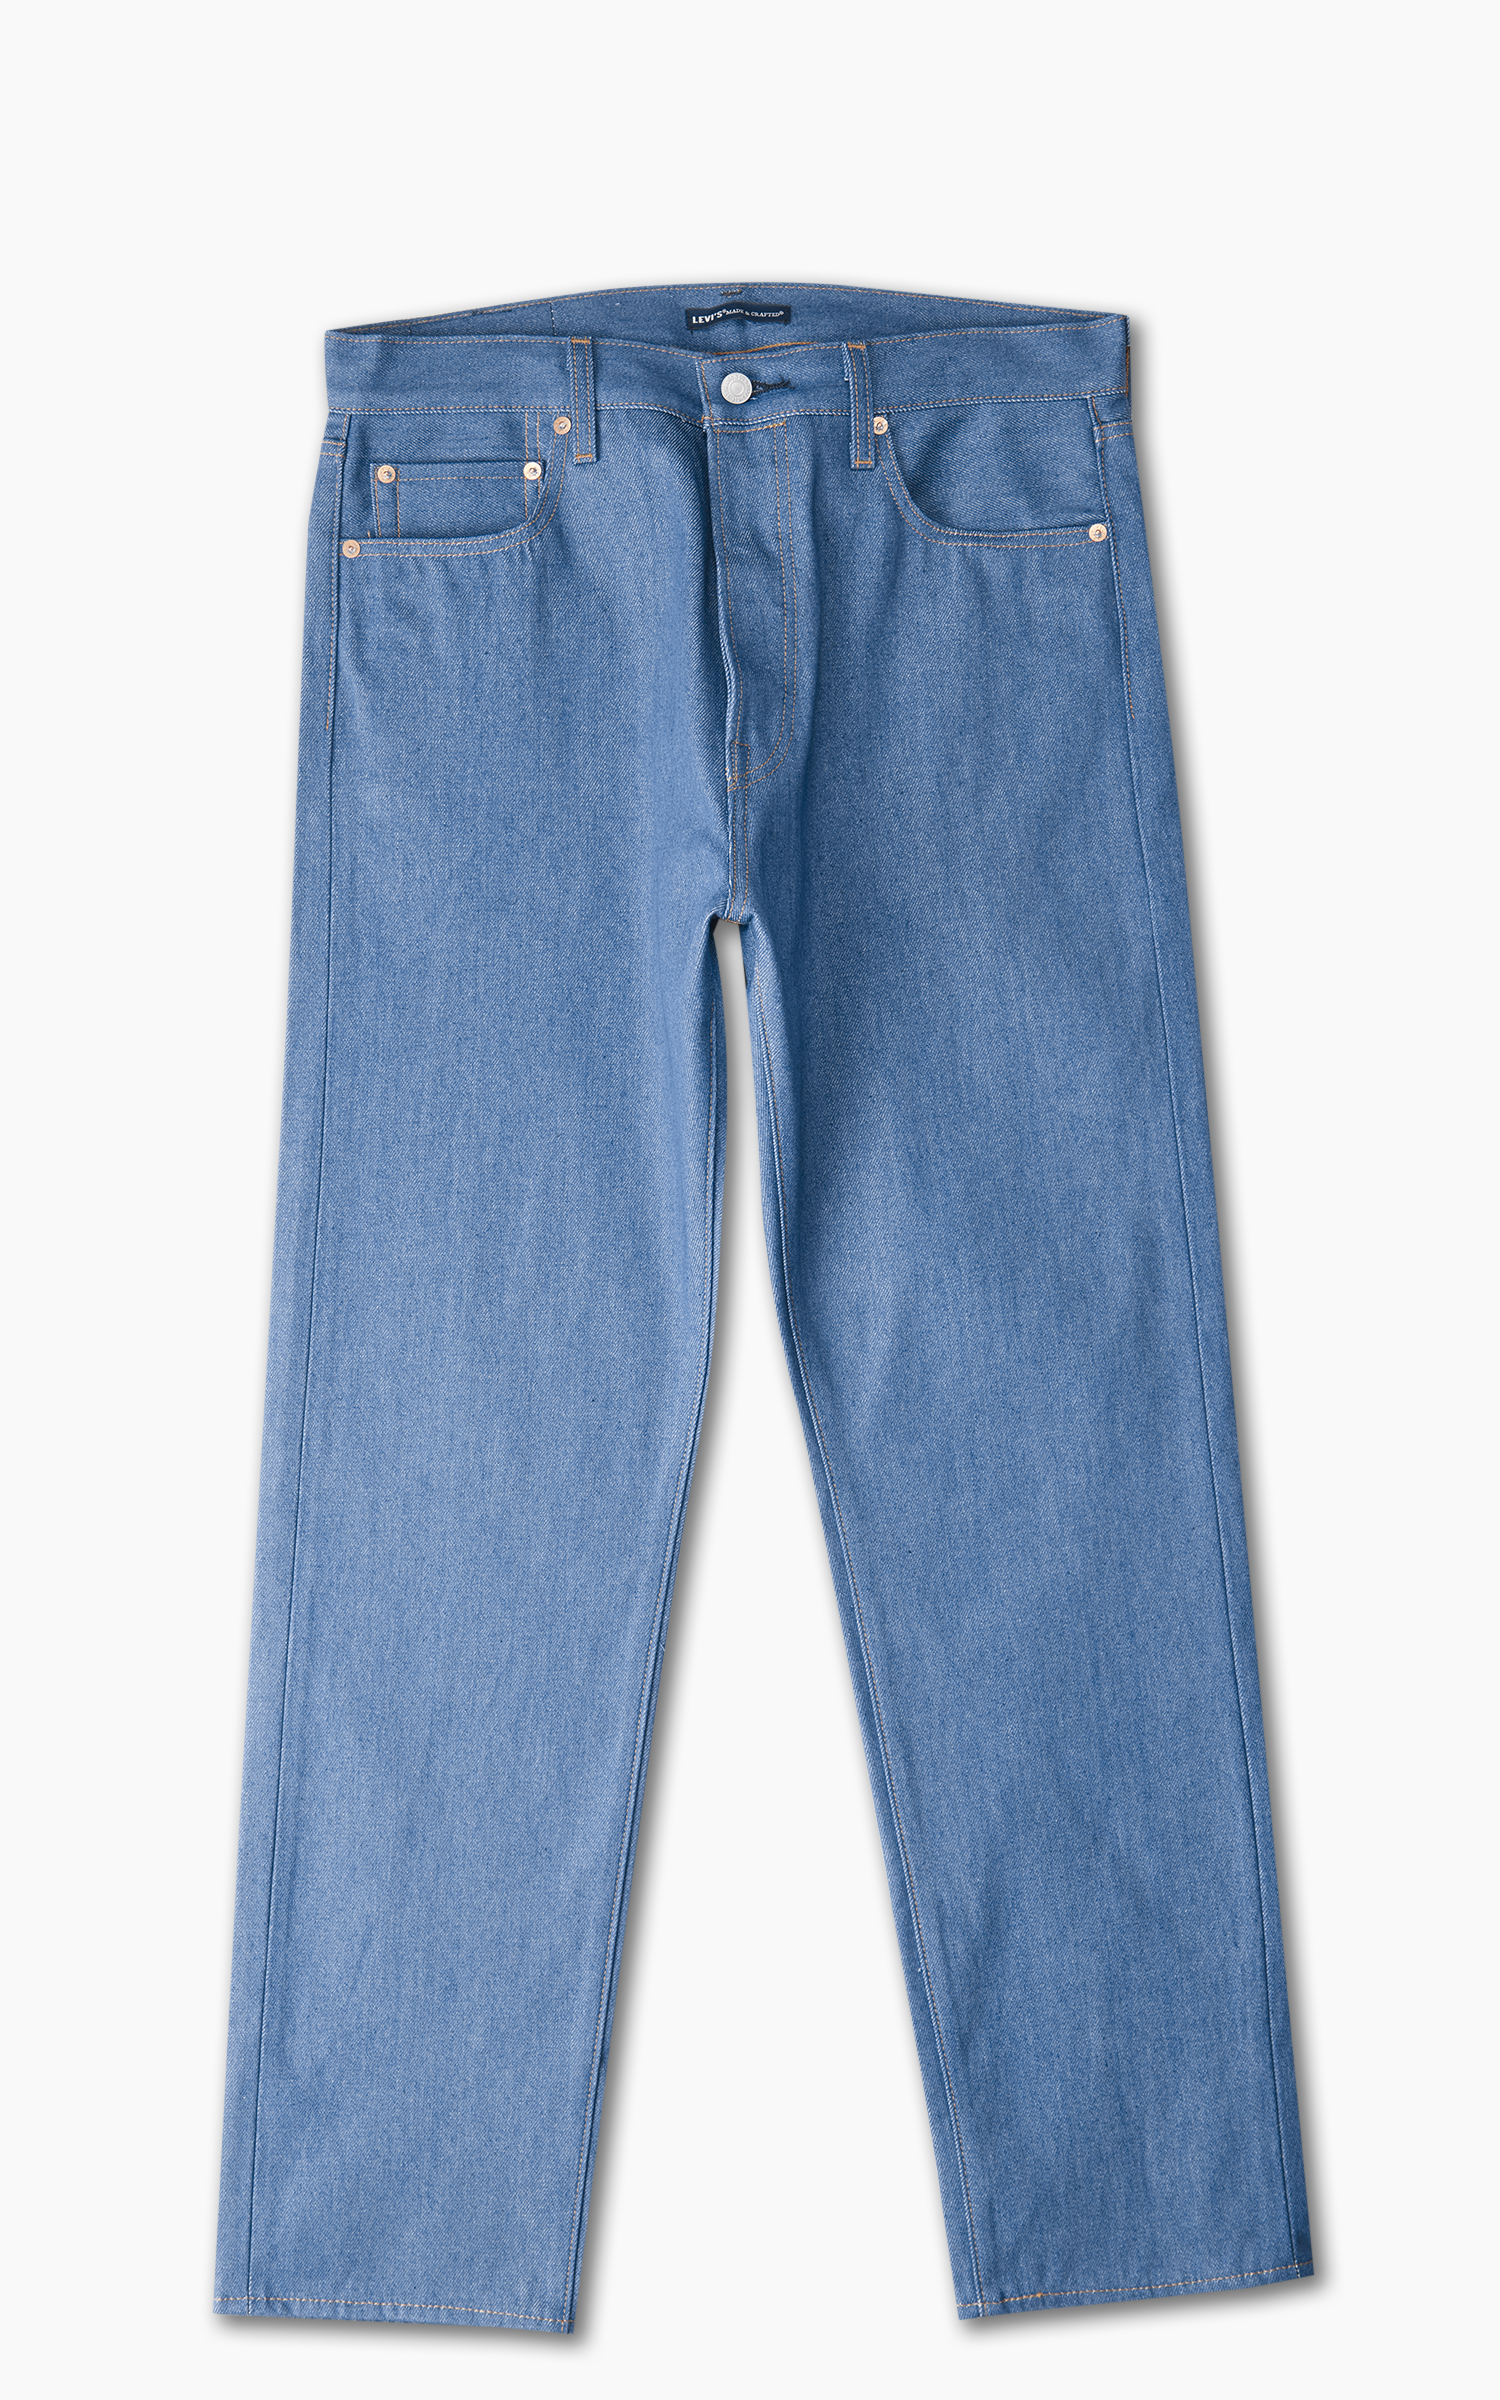 Levi's® Made & Crafted® - Premium Denim, Jeans & Clothes